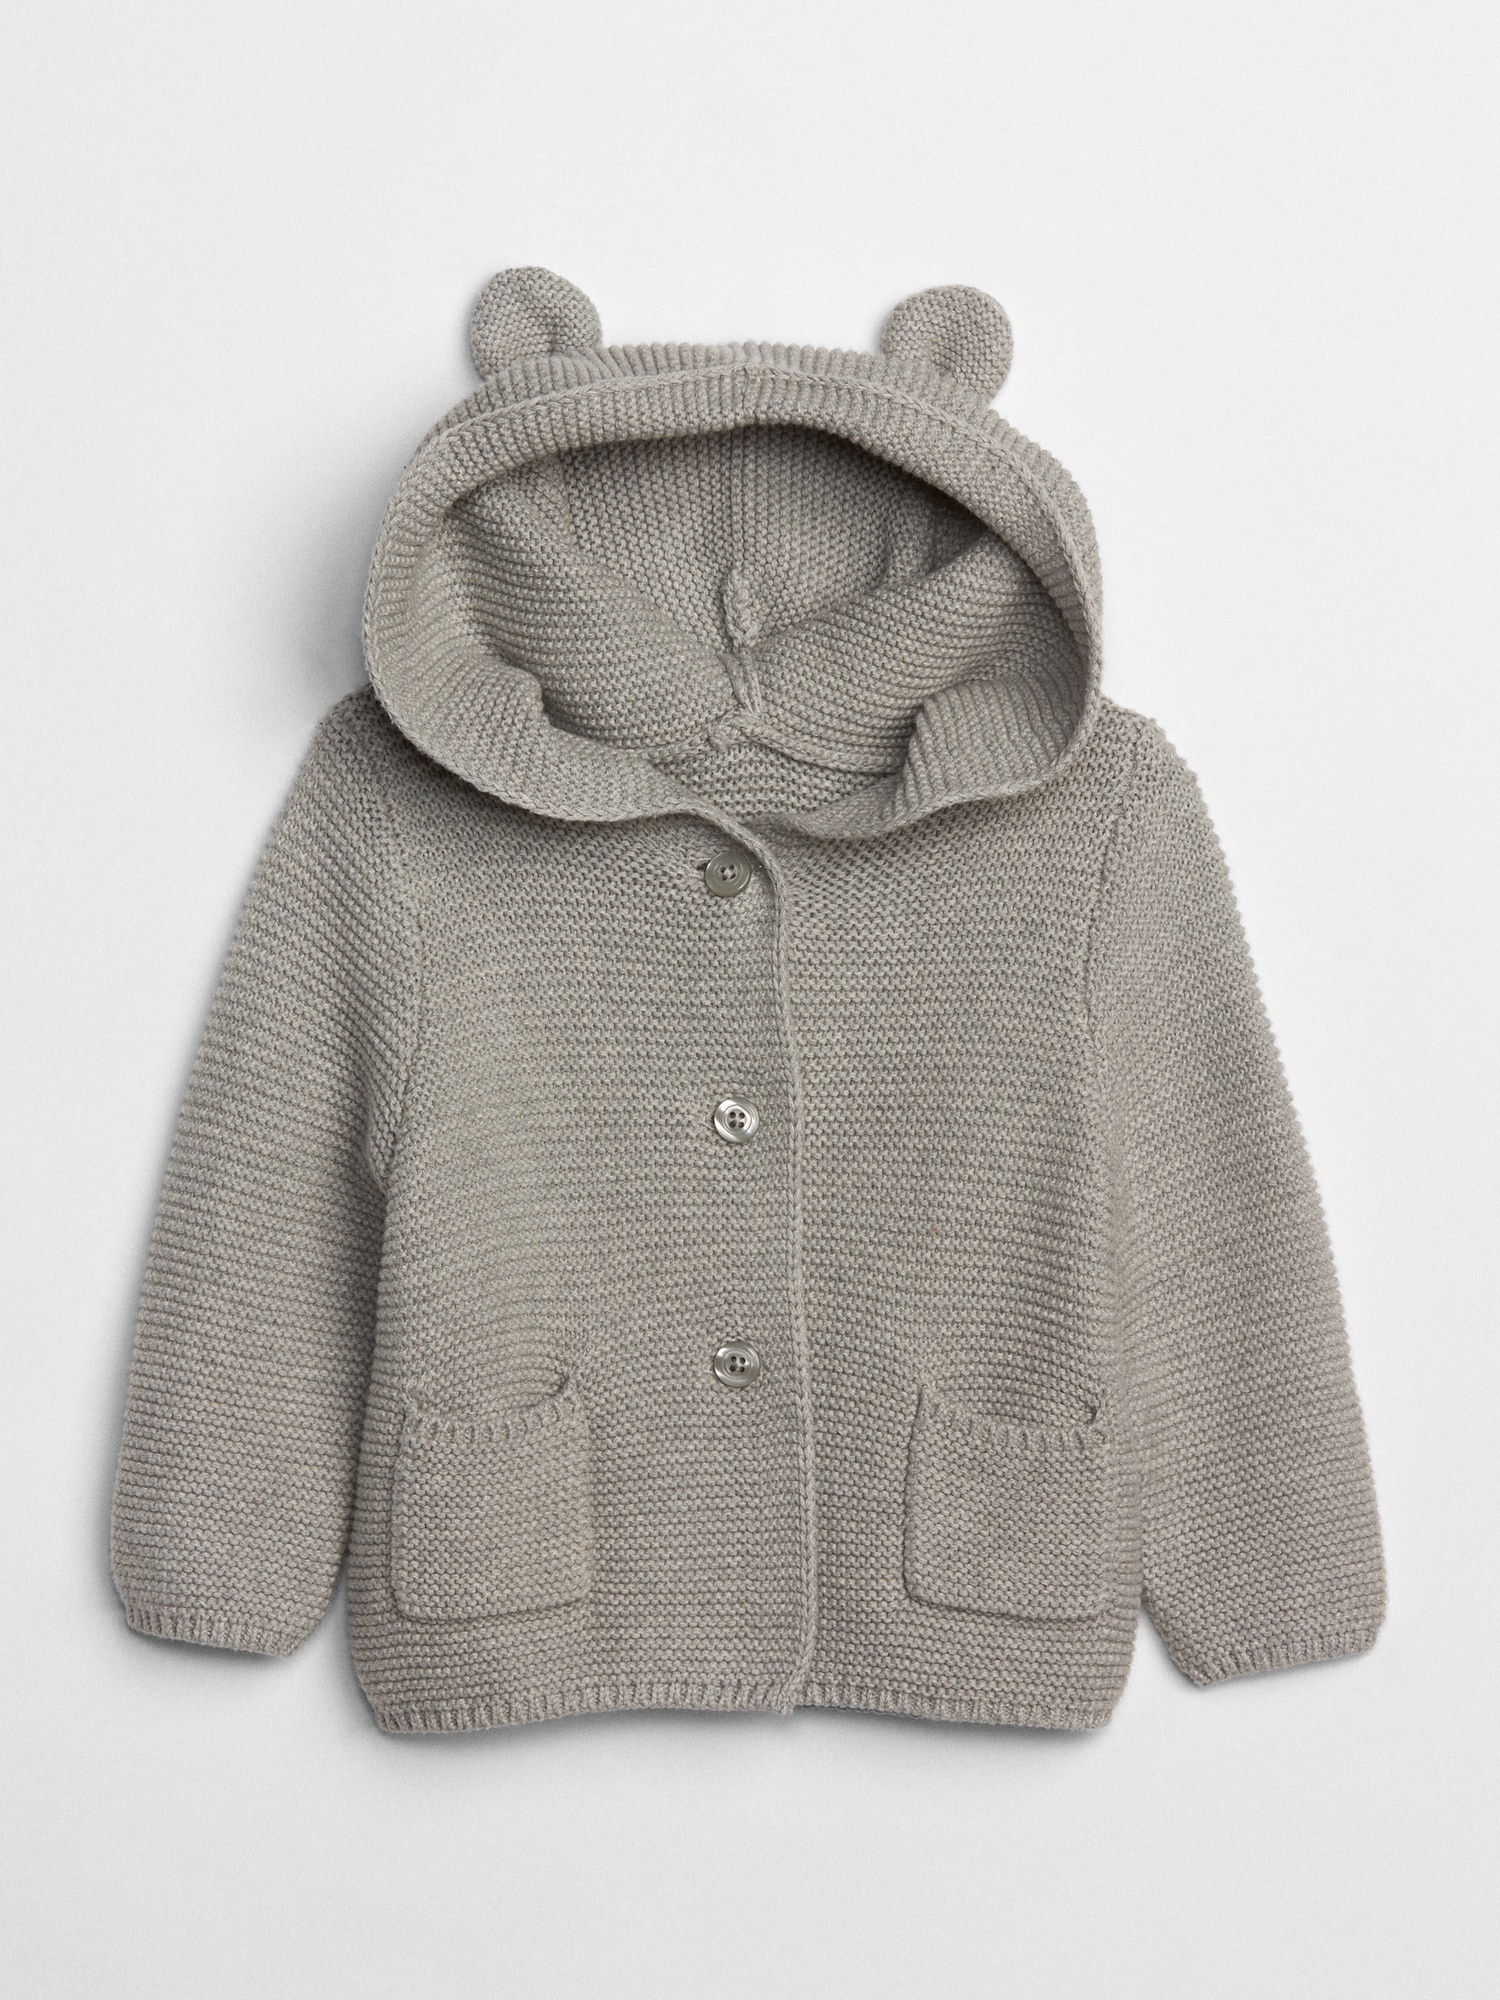 Gap Kids' Baby Brannan Bear Sweater In Gray